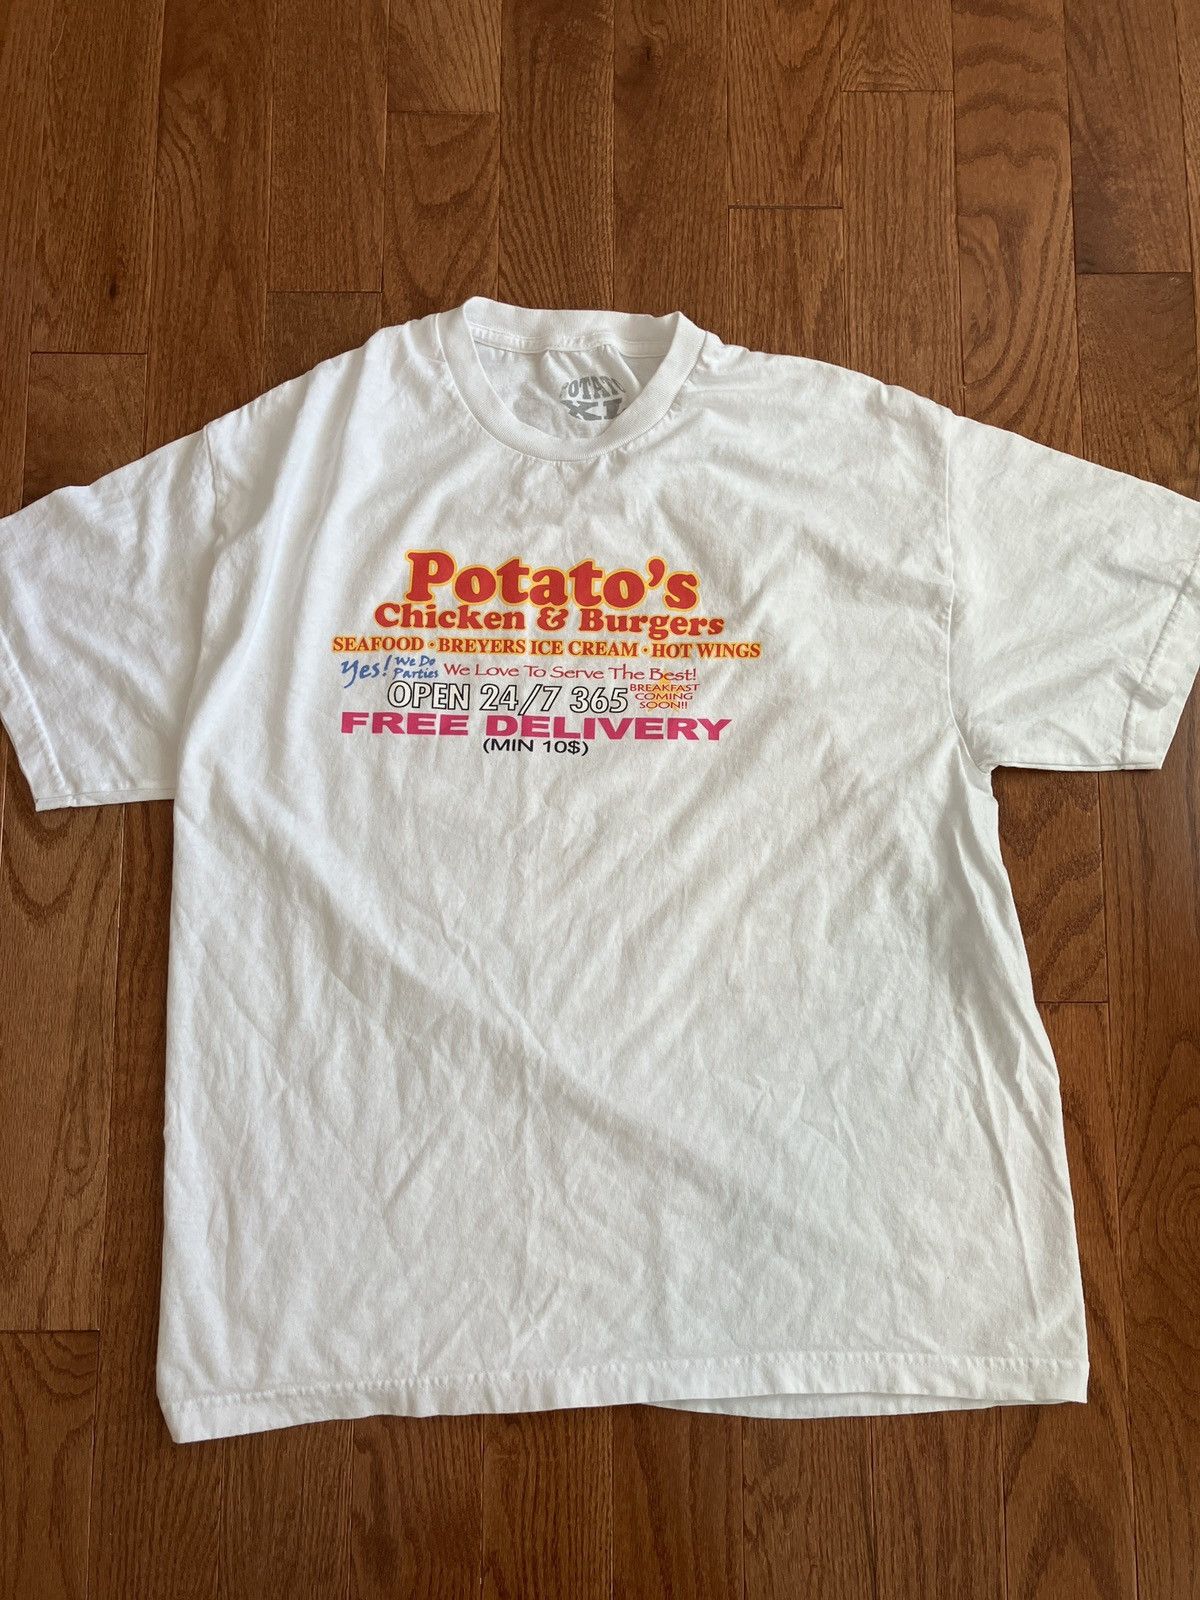 imran potato t shirt, 公認海外通販サイト, セカイモン